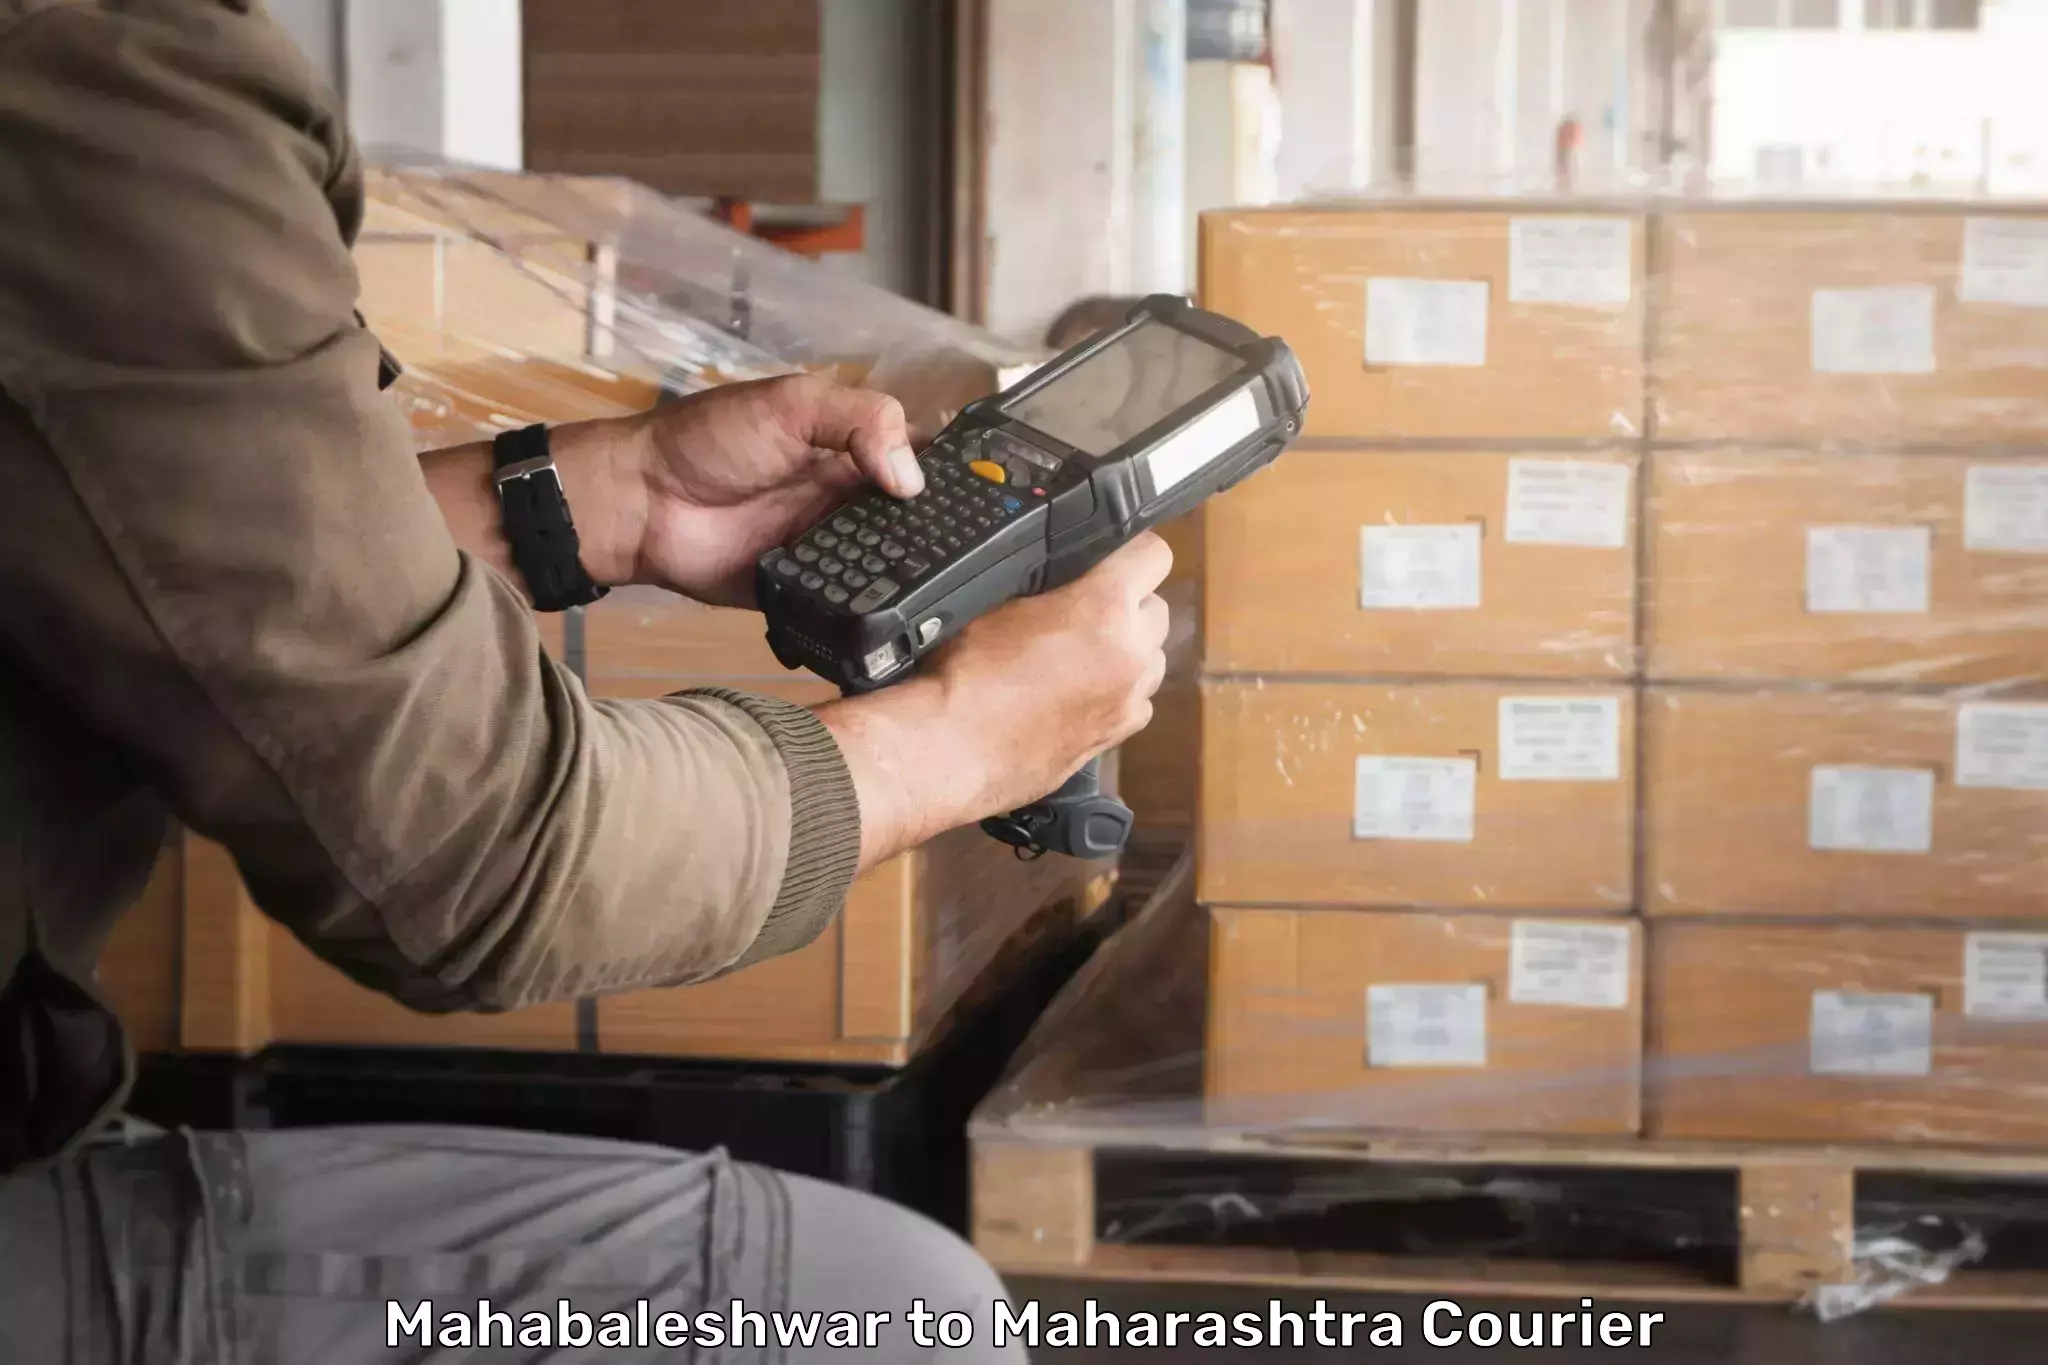 Modern delivery methods Mahabaleshwar to Navi Mumbai